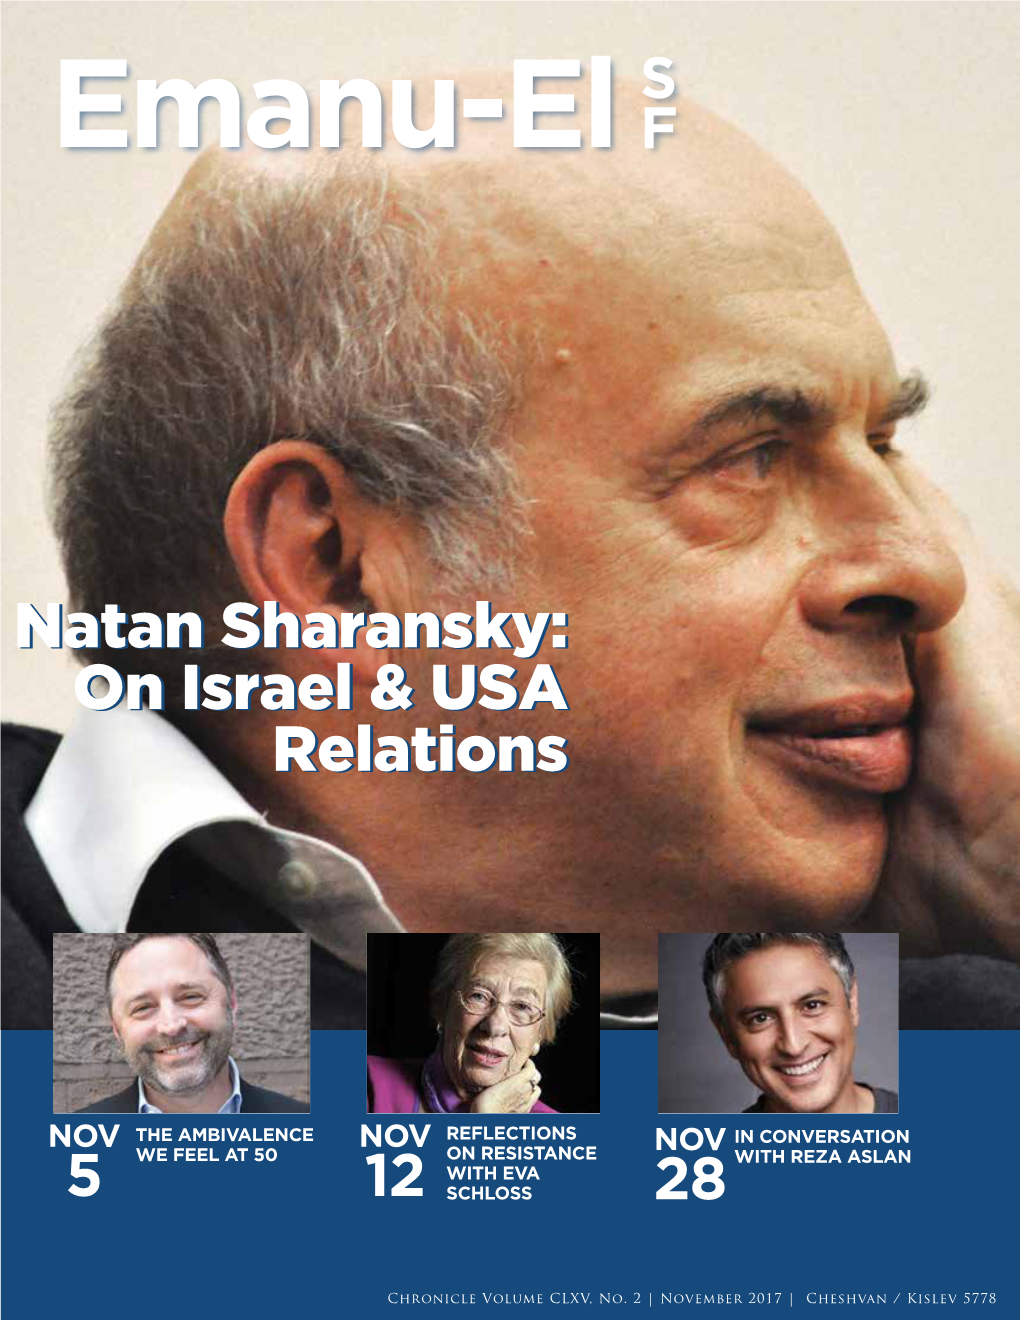 Natan Sharansky: on Israel & USA Relations